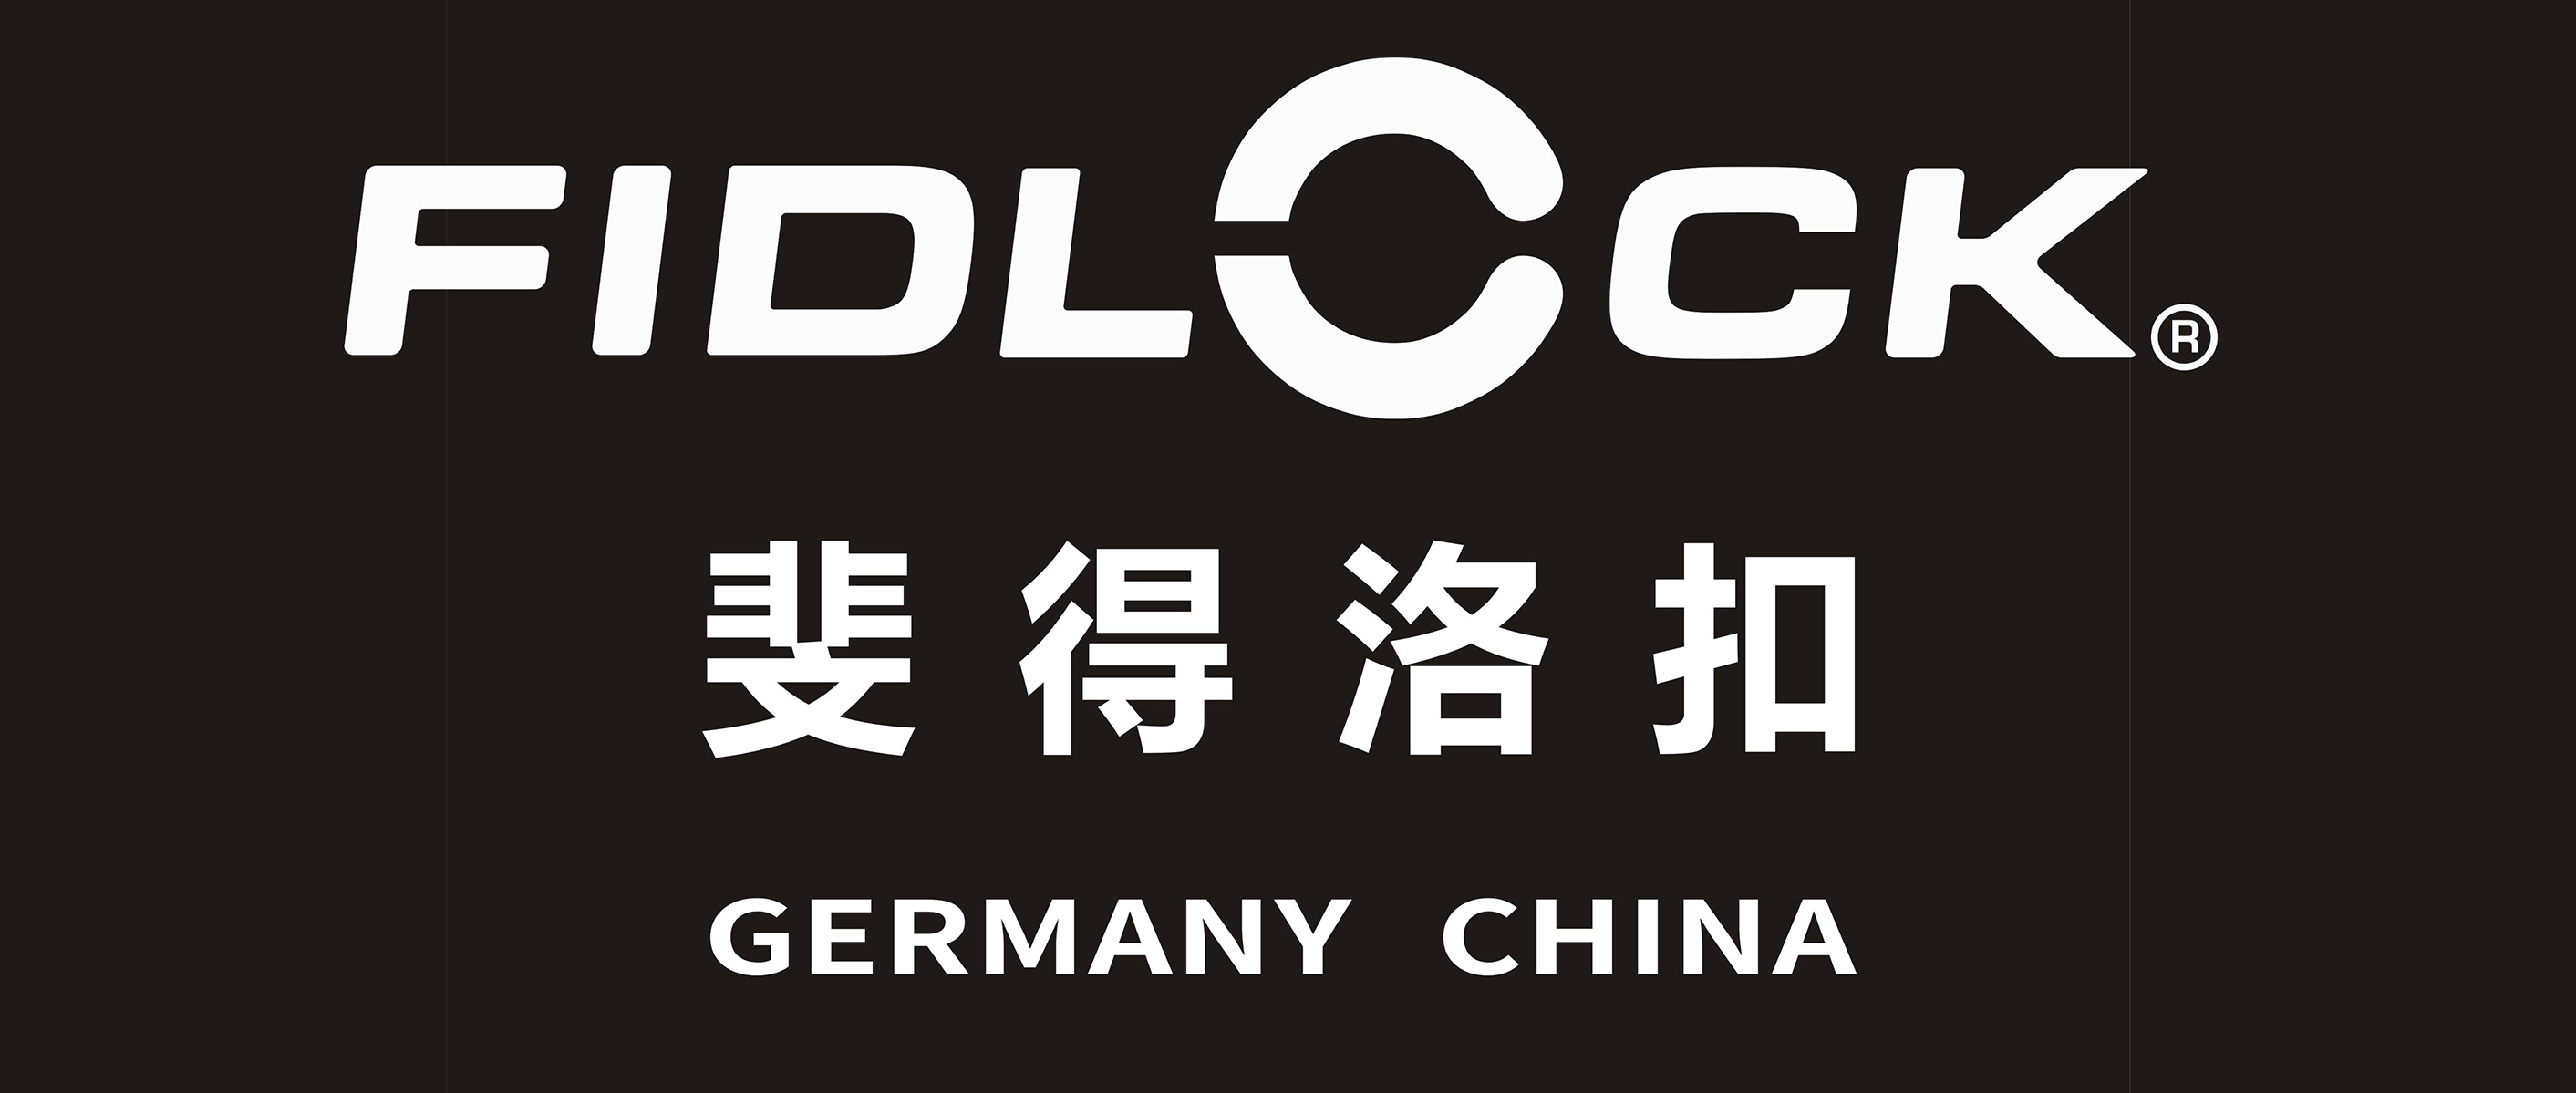 FIDLOCK China Logo